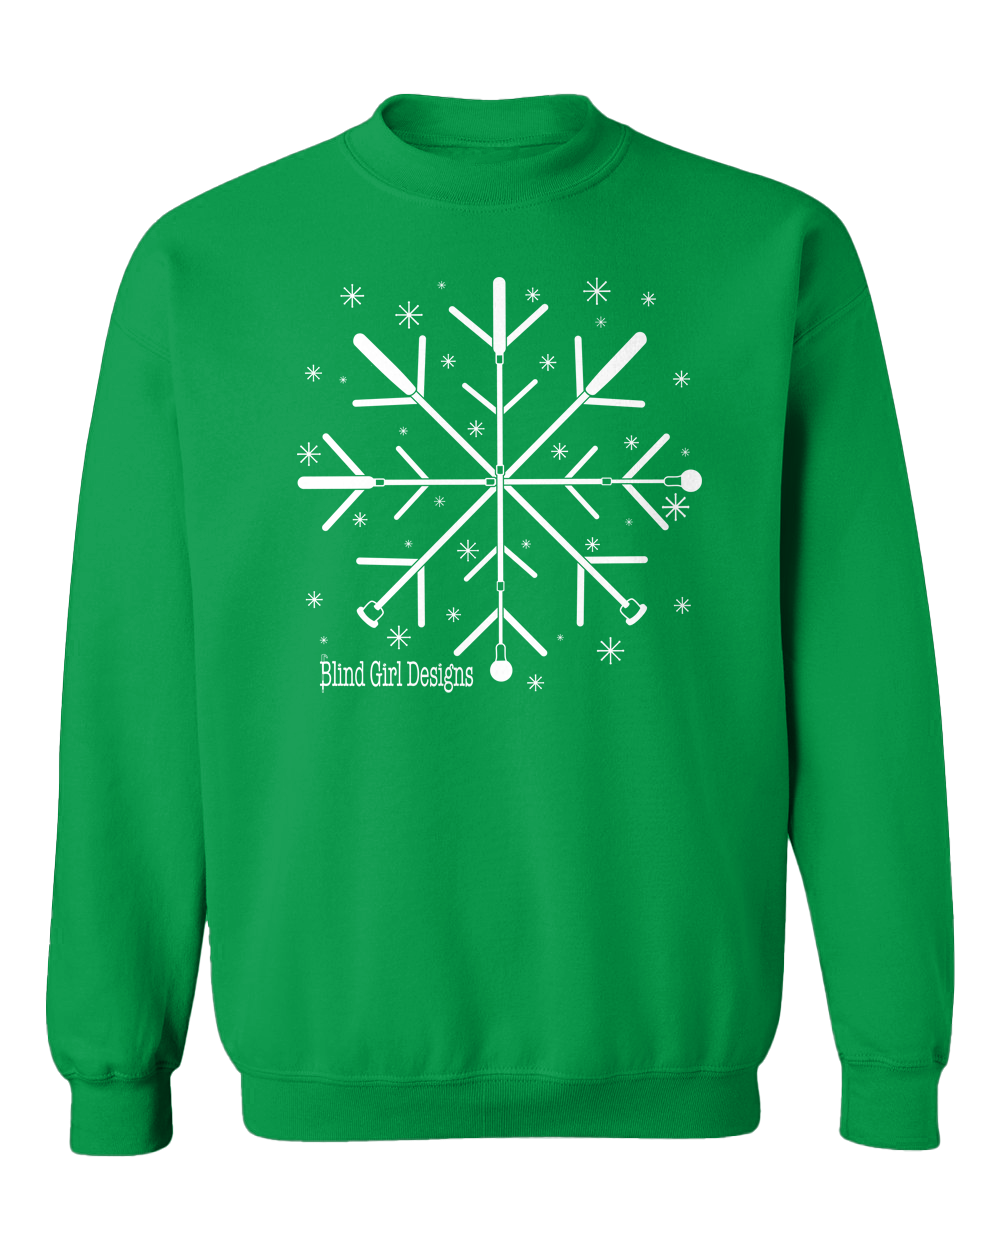 New 3D! Super Tactile Snowflake White Cane Crew Sweatshirt - Irish Green